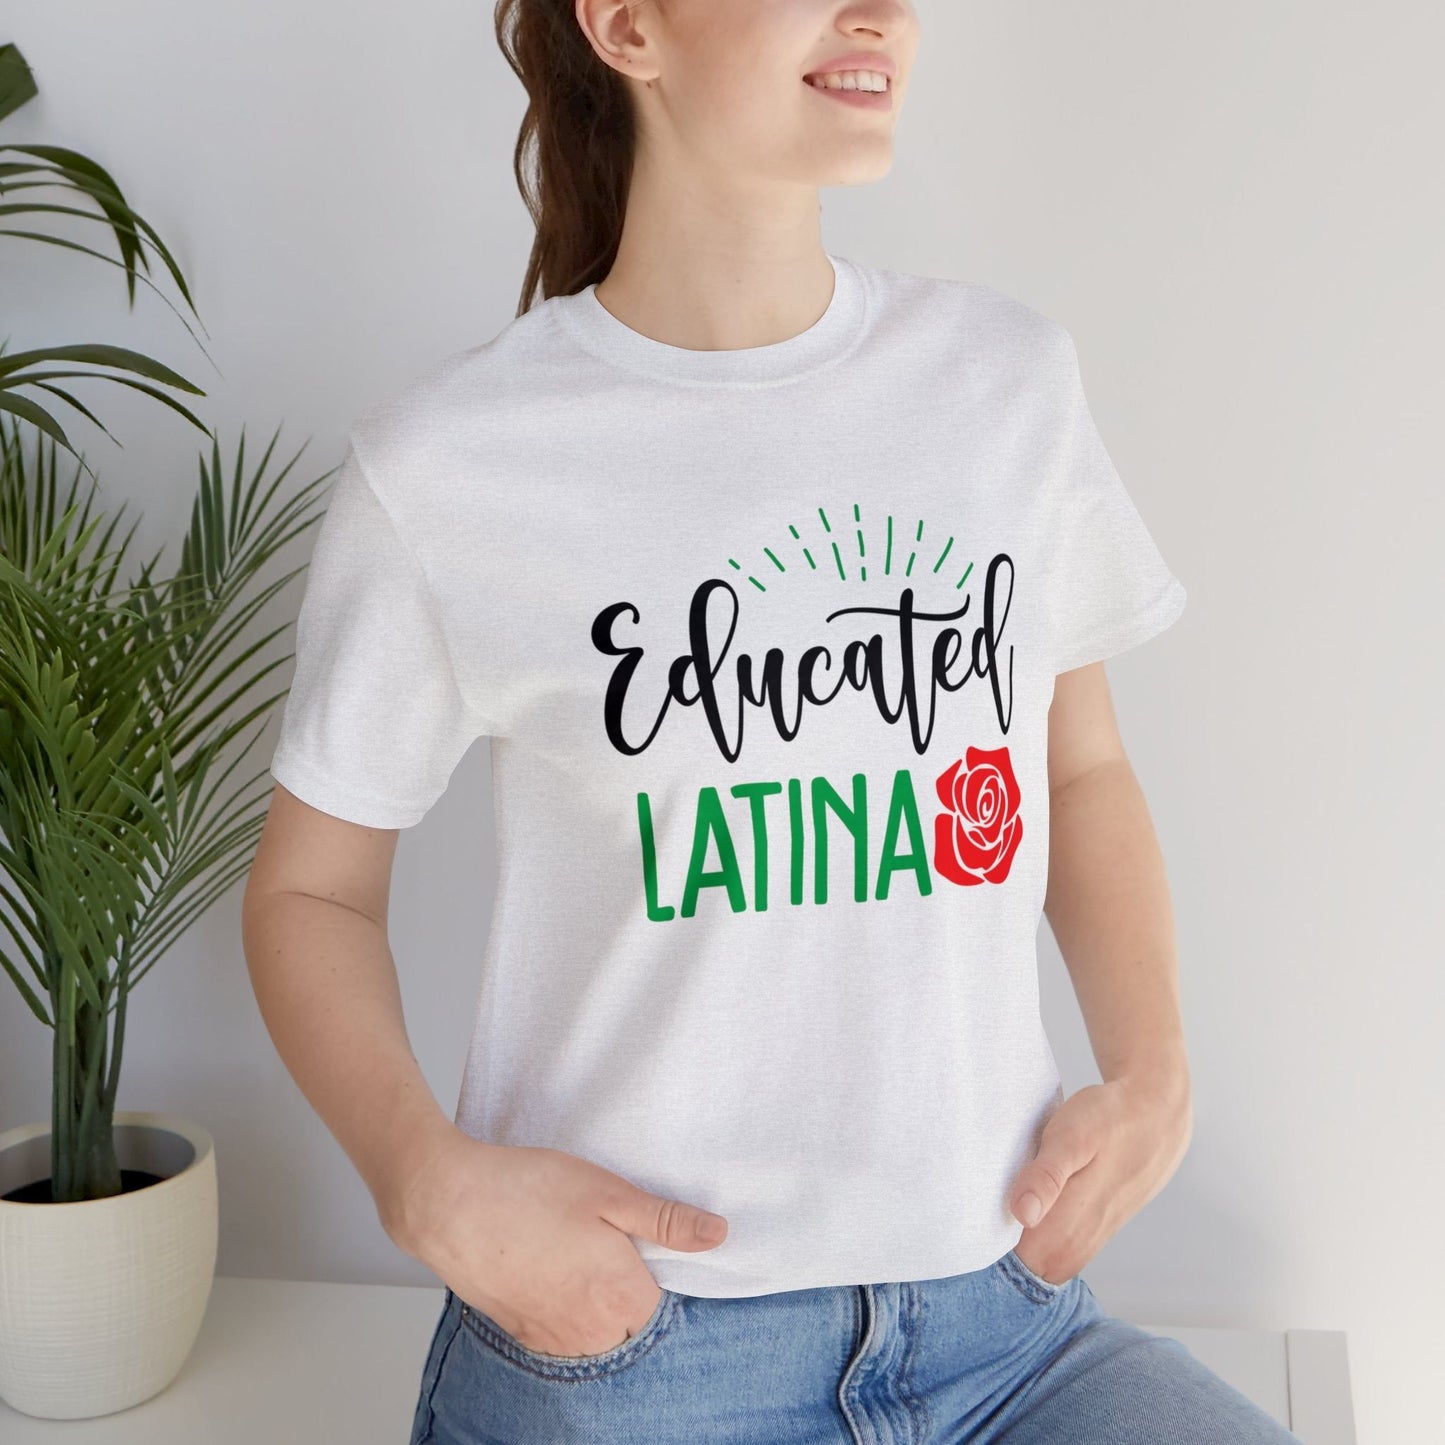 Camiseta - Educated Latina